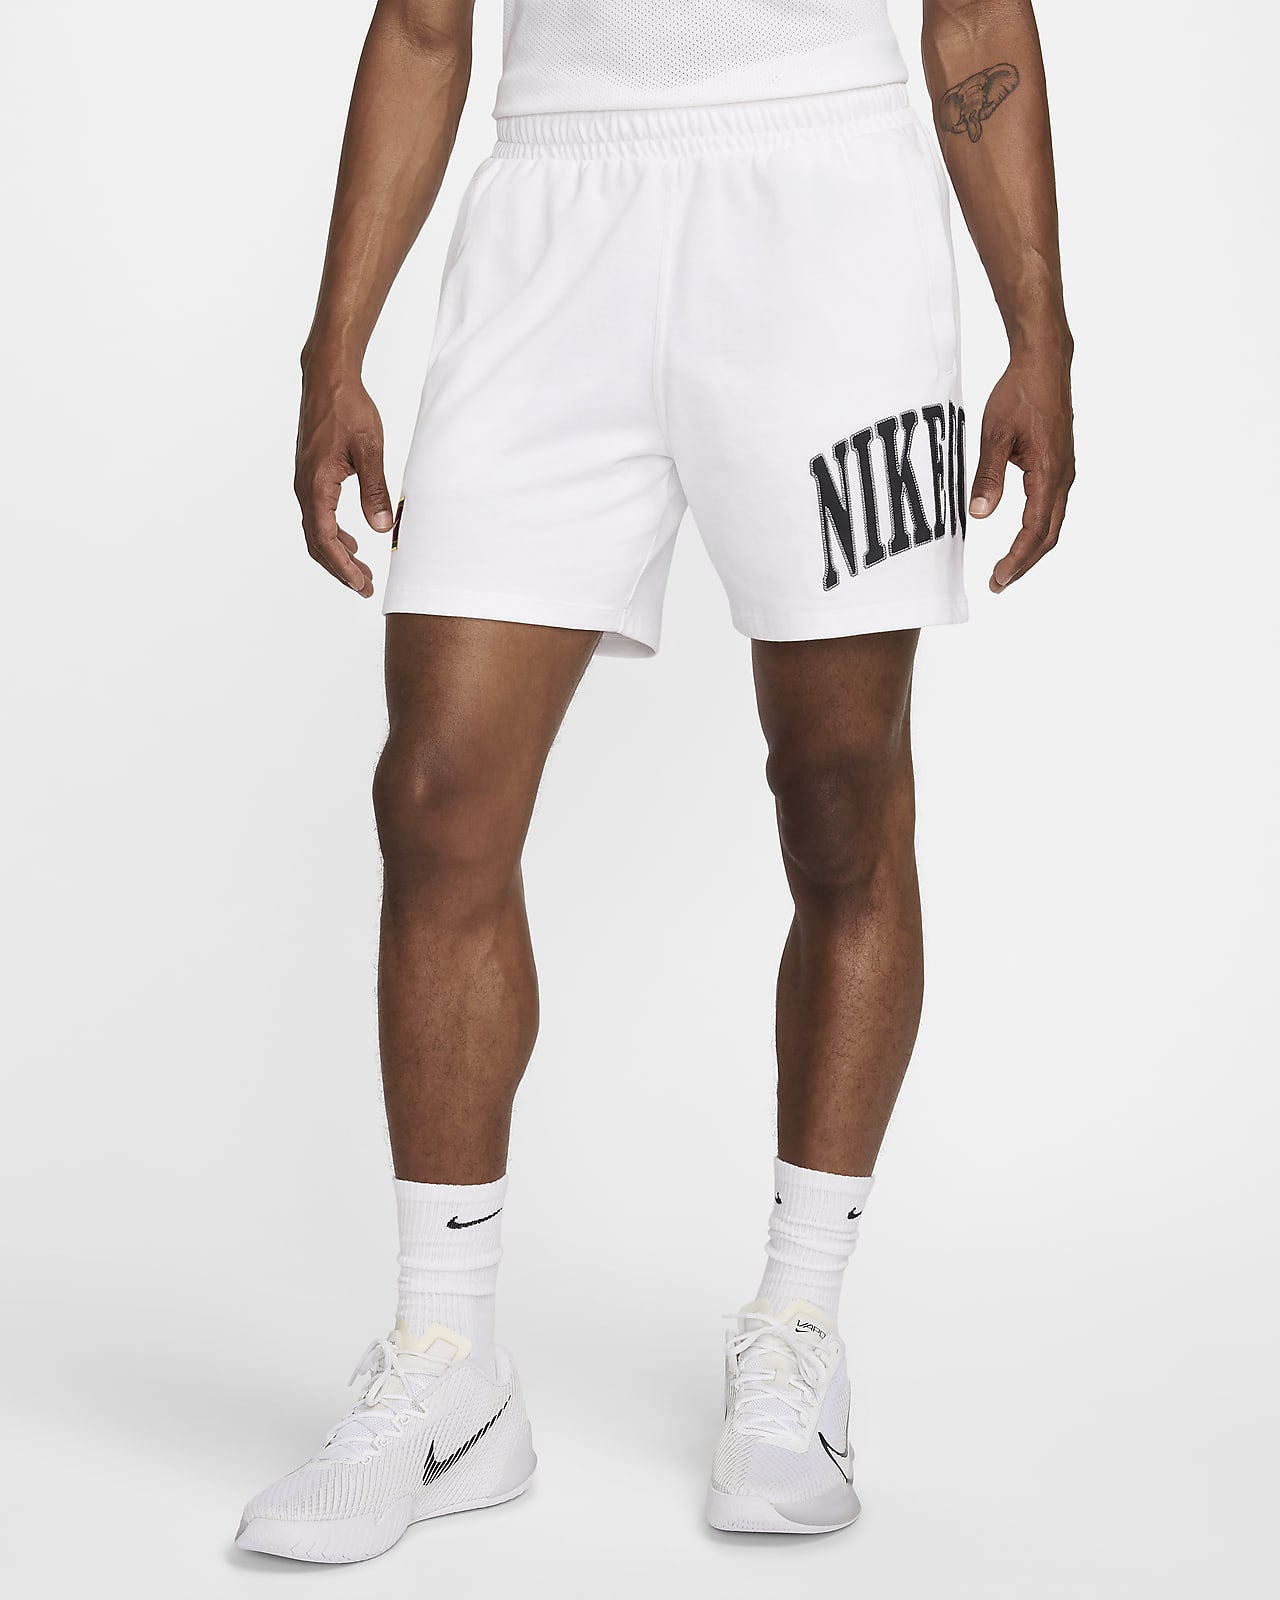 NikeCourt Heritage Men's 6" Tennis Shorts